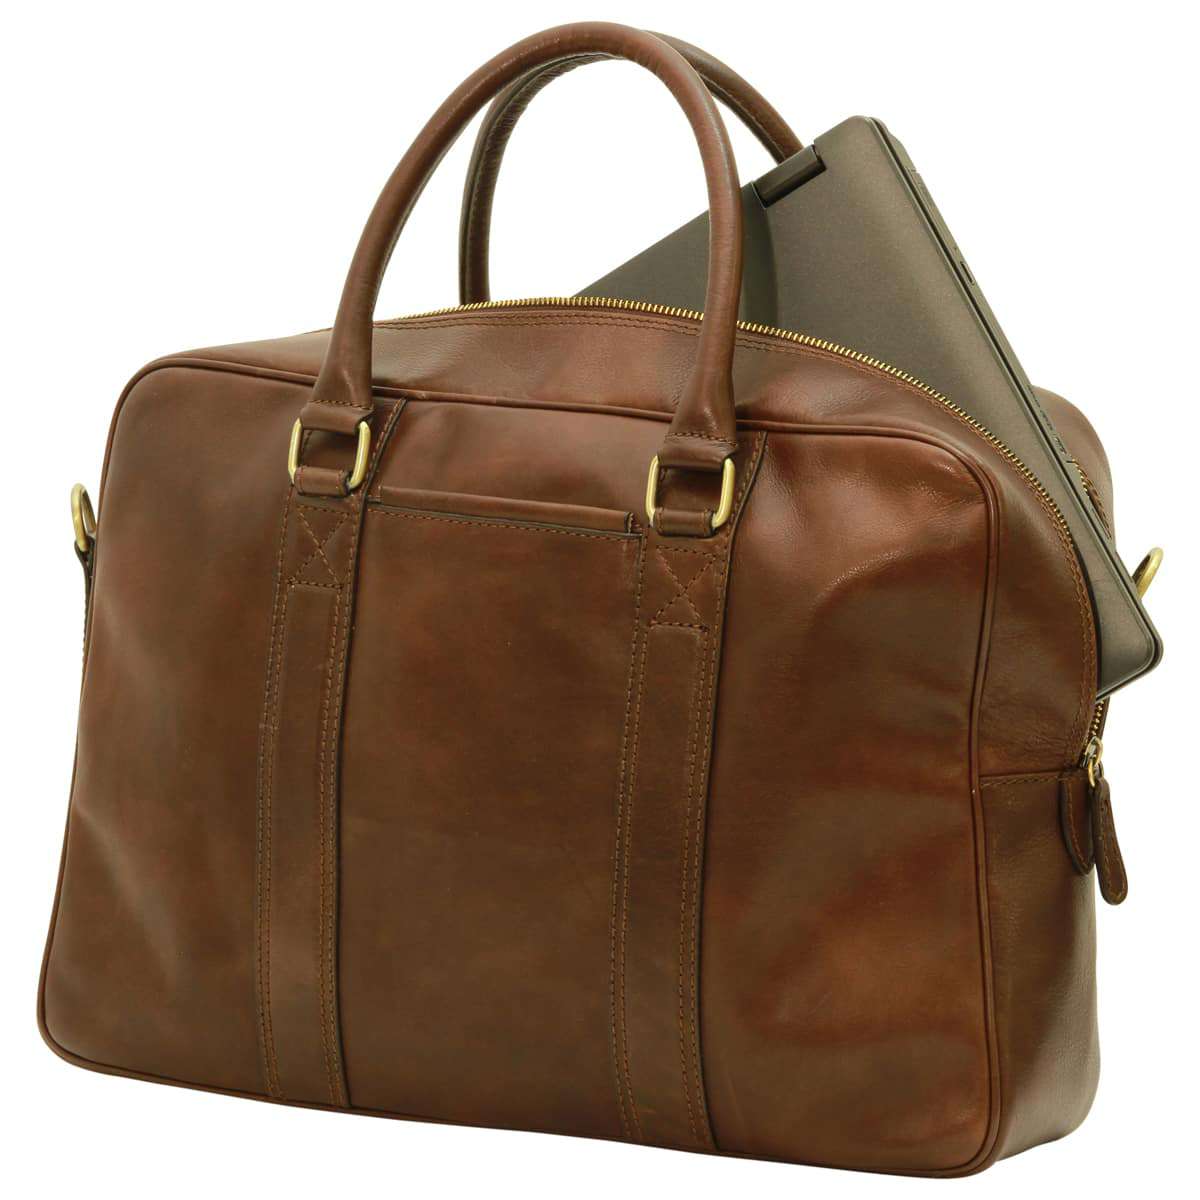 Soft Calfskin Leather Briefcase - Dark Brown | 030191TM US | Old Angler Firenze